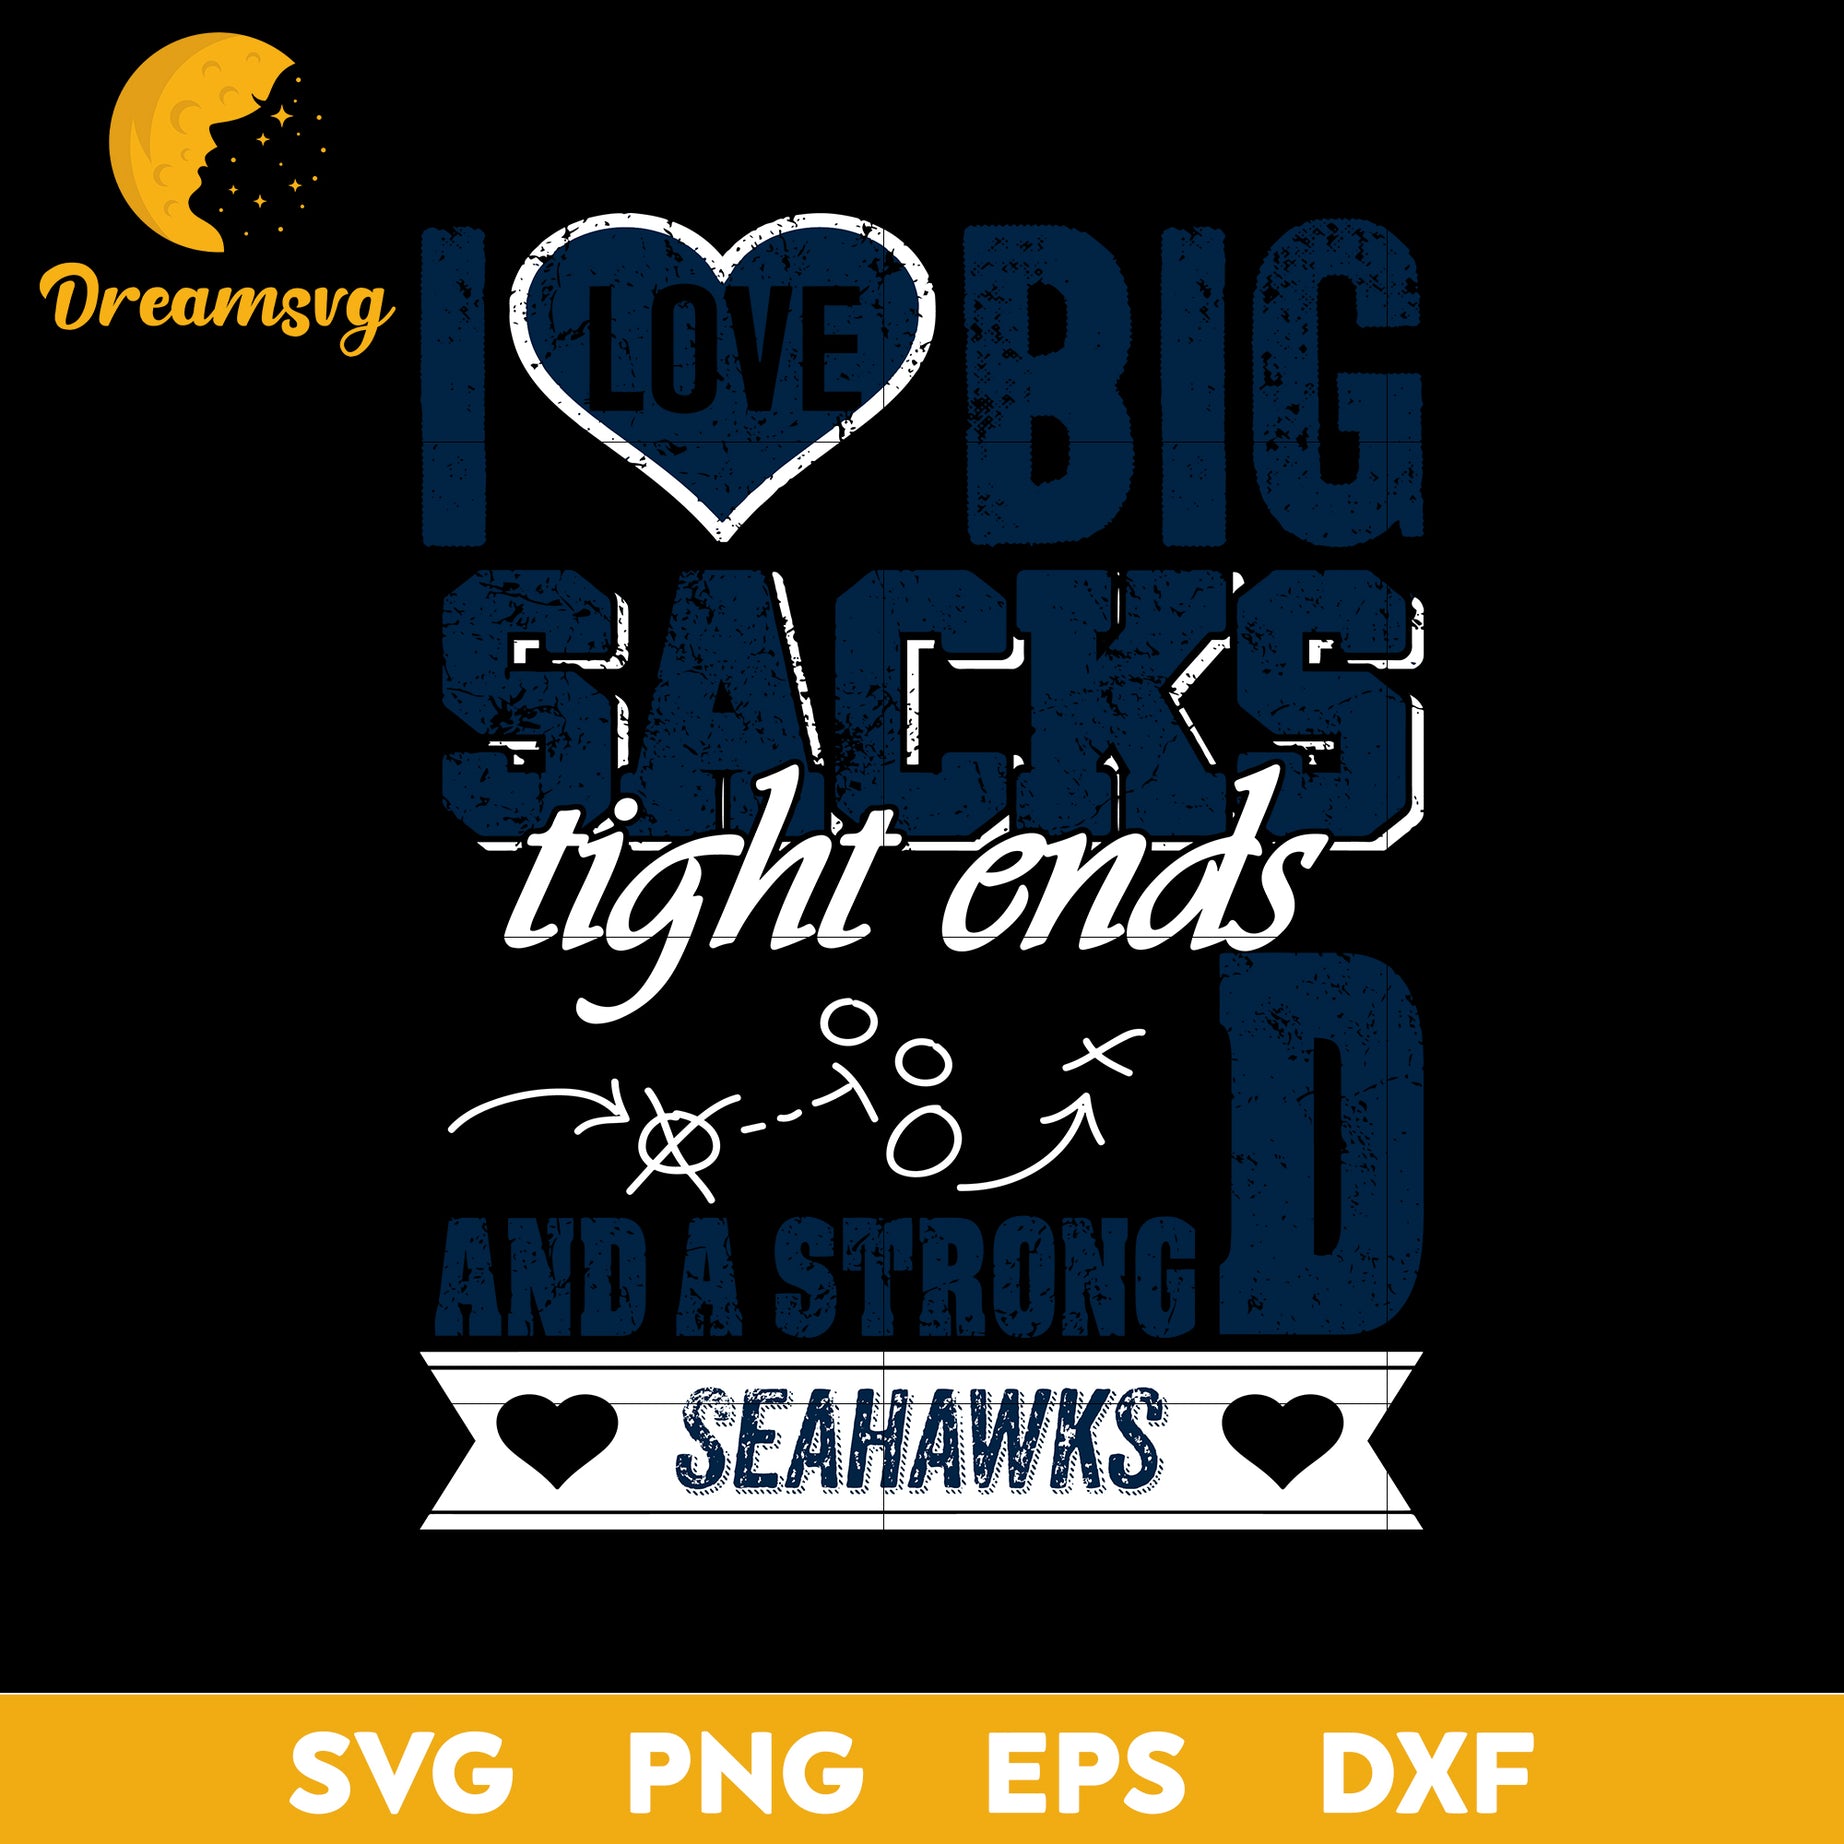 I Love Big Sacks tight ends and a strongD Seattle Seahawks Svg , Nfl Svg, Png, Dxf, Eps Digital File.